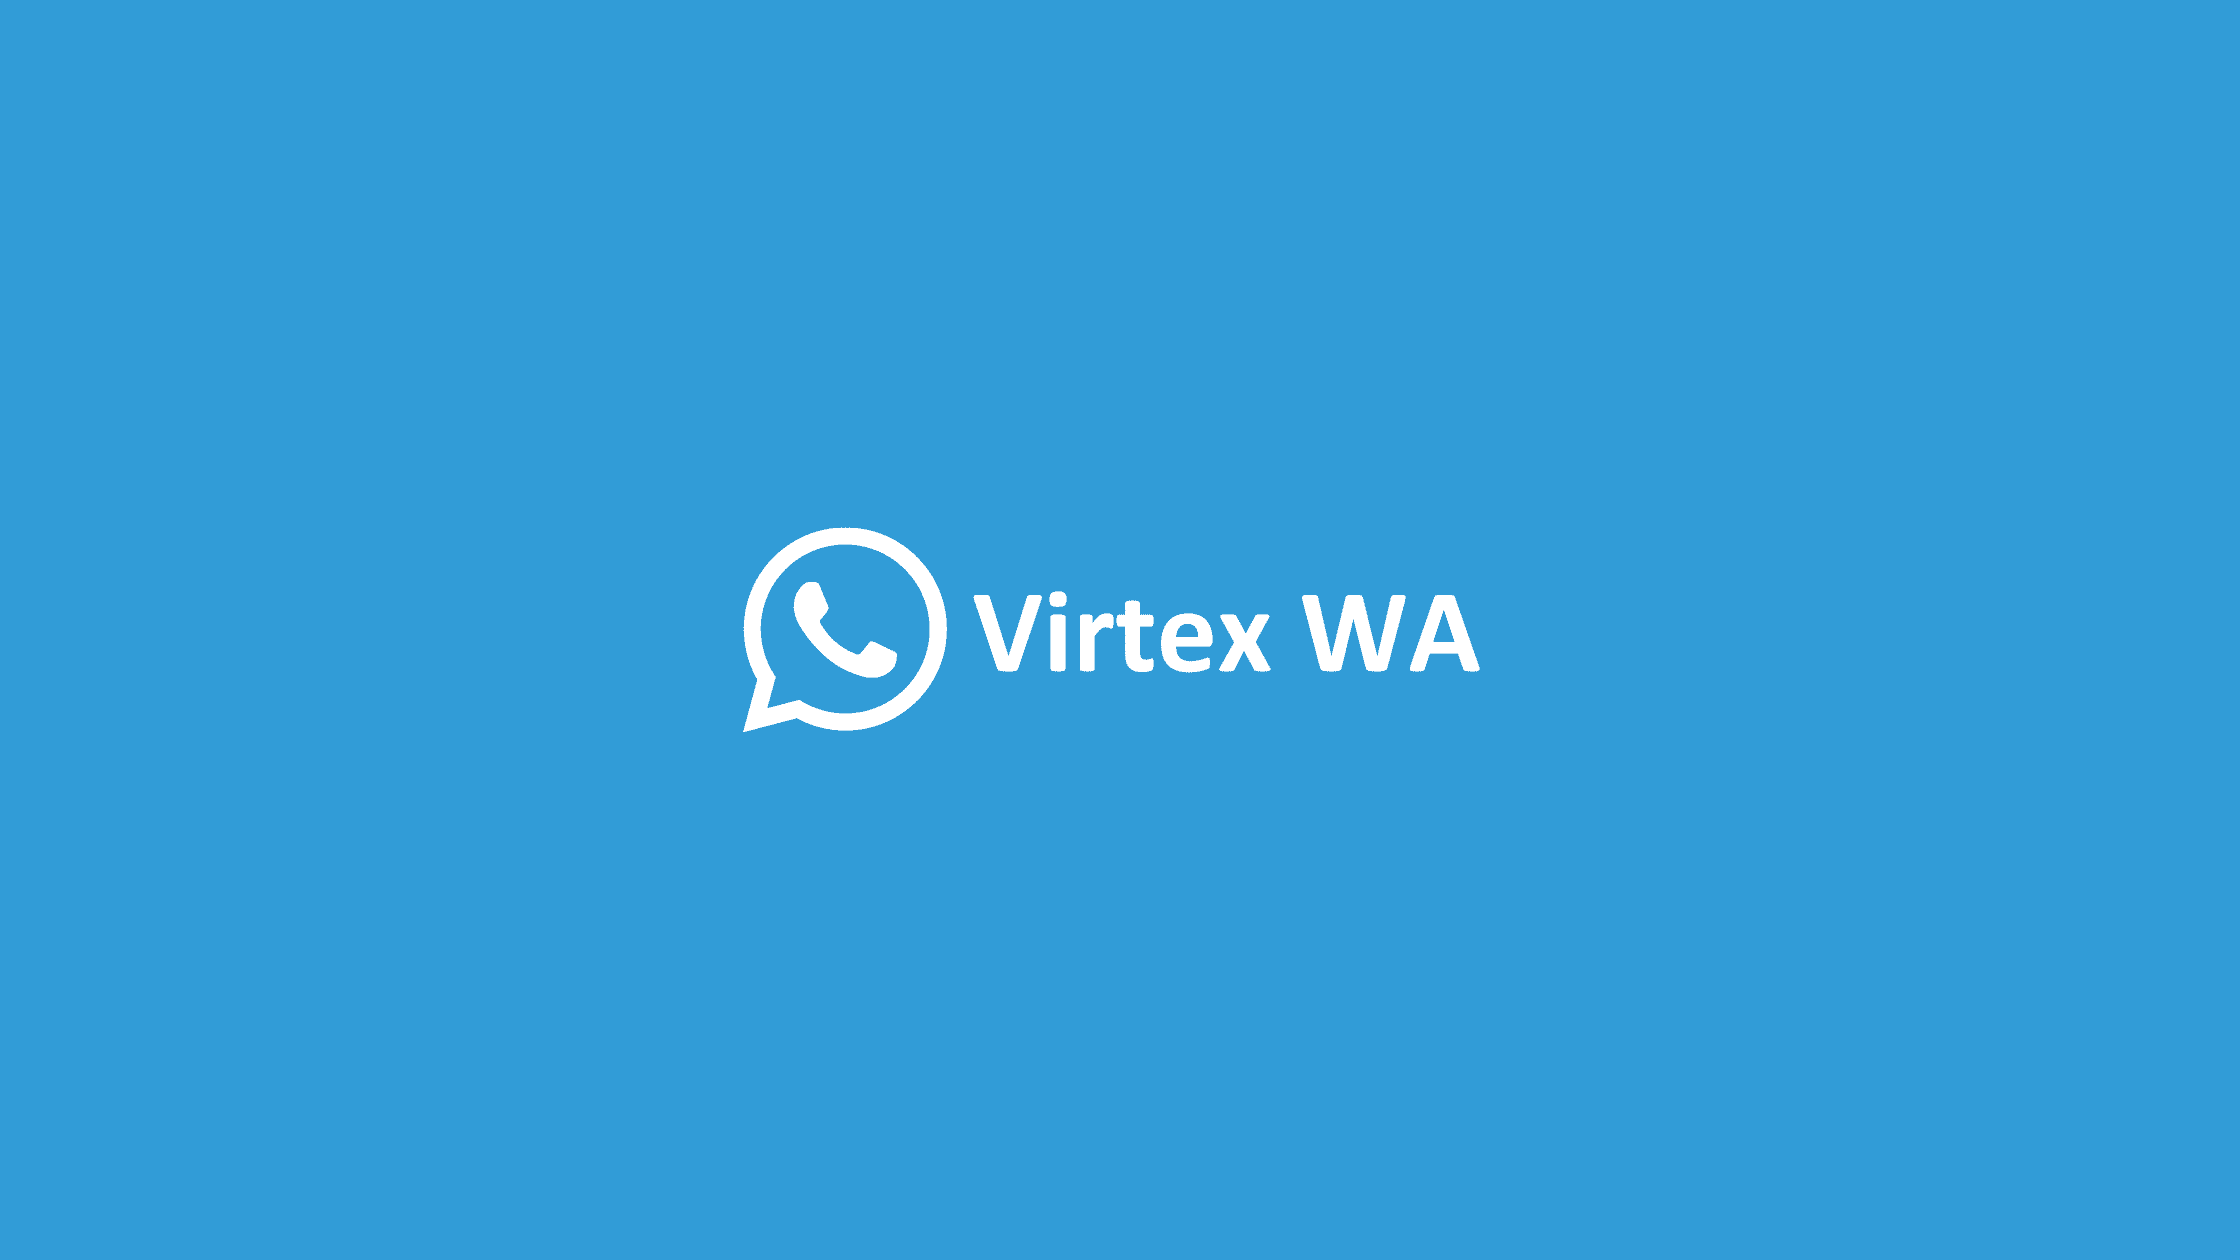 virtex wa